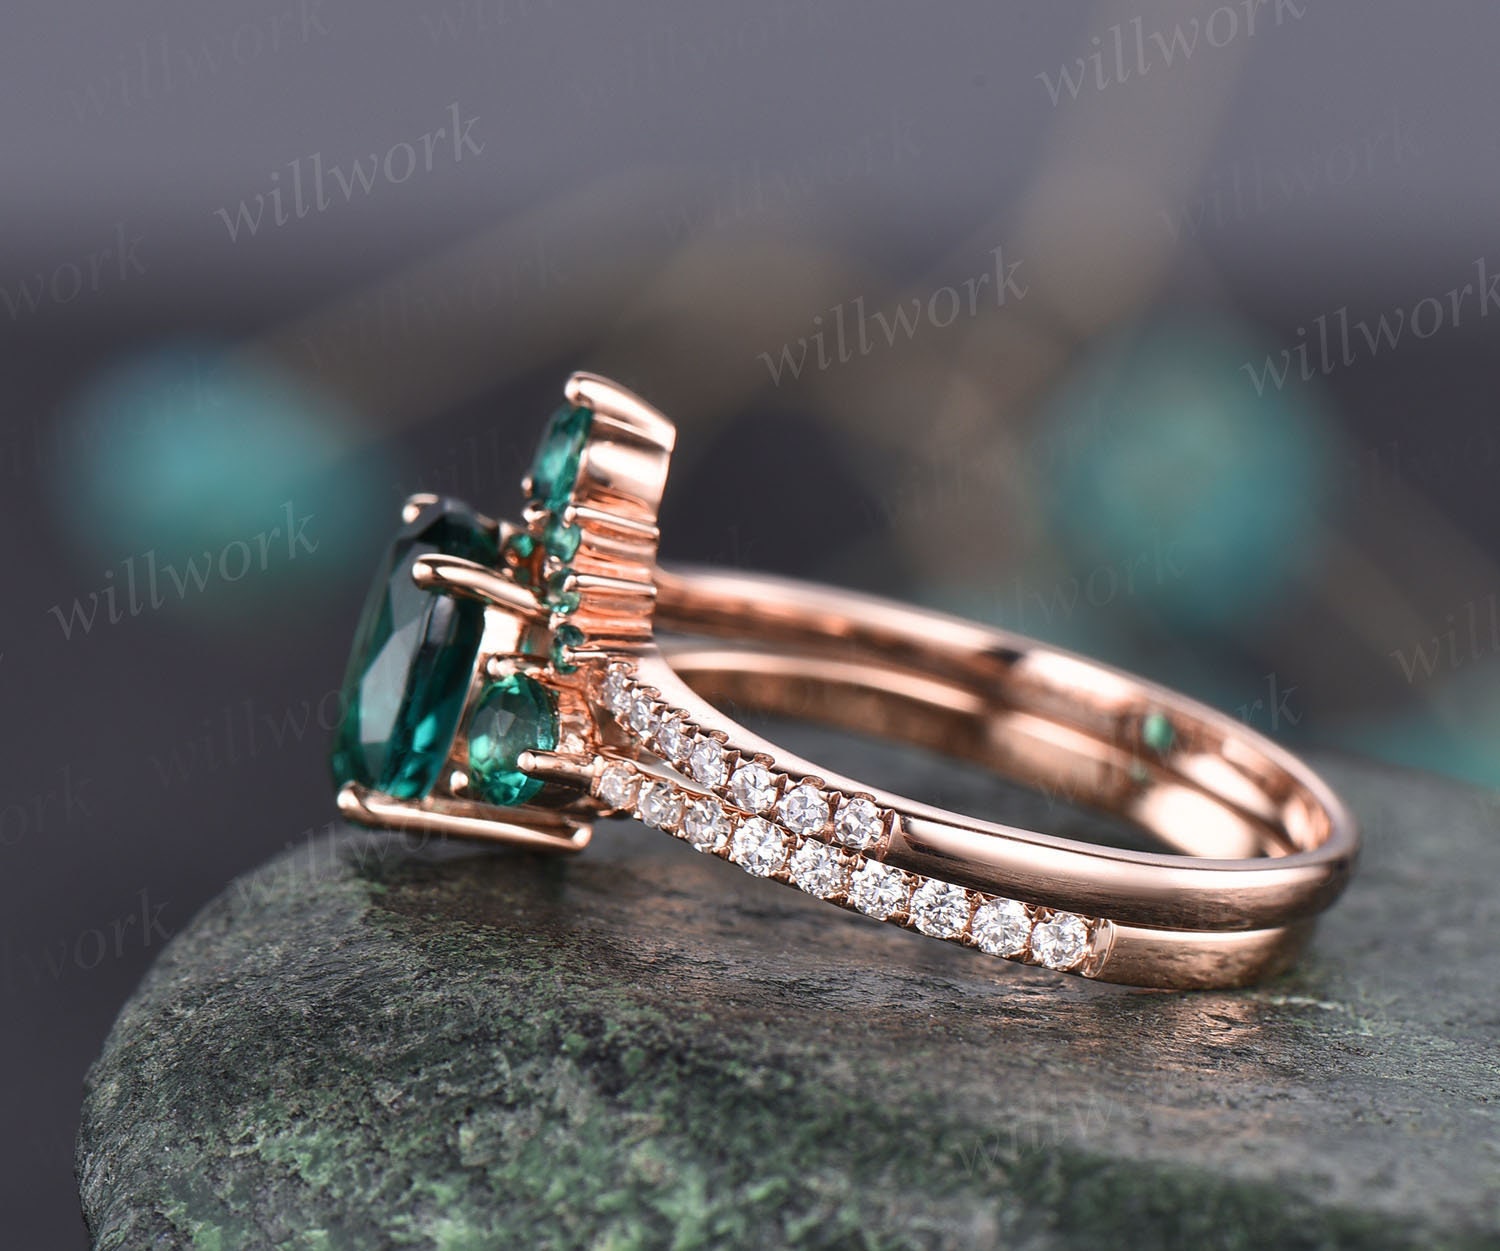 Vintage Oval Emerald Engagement Ring White Gold Women Bridal Set 1.2 Carat